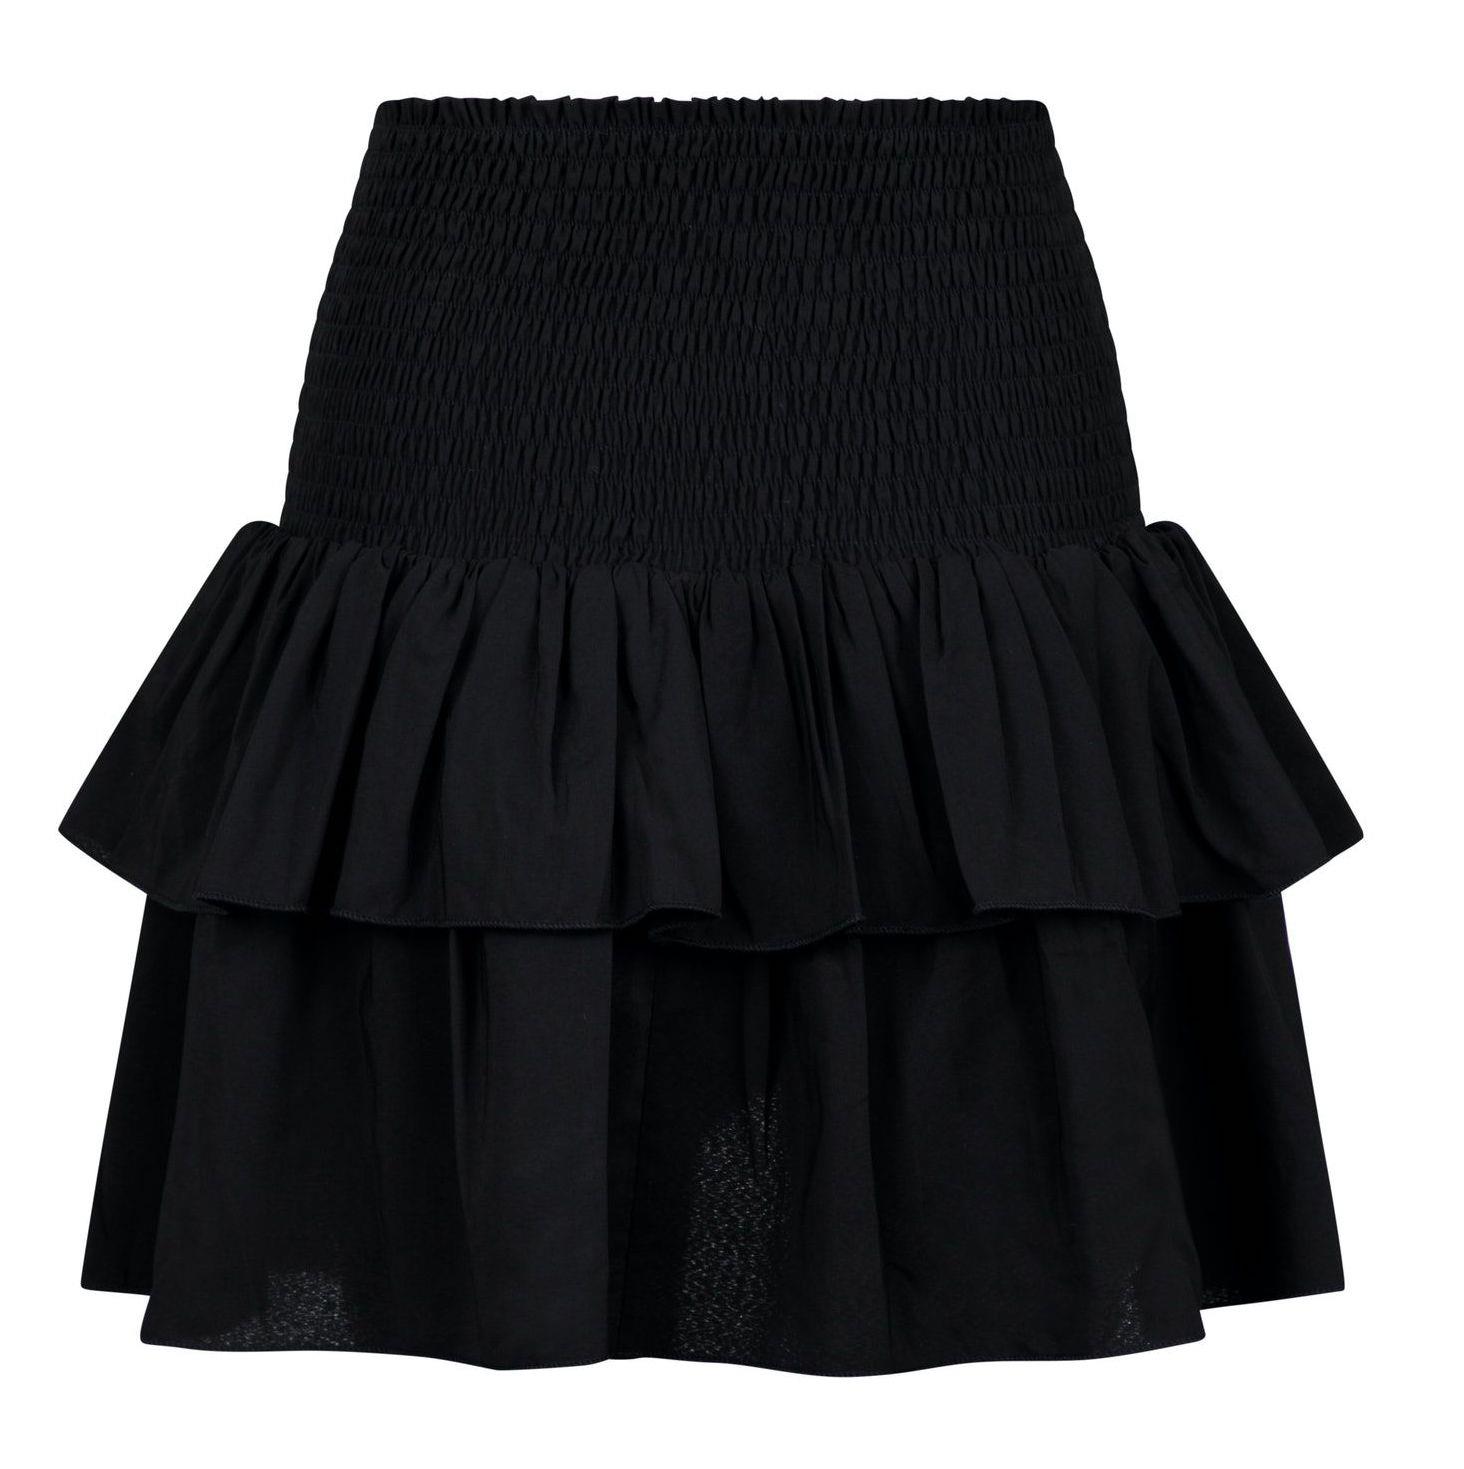 Neo - Carin R Skirt Black